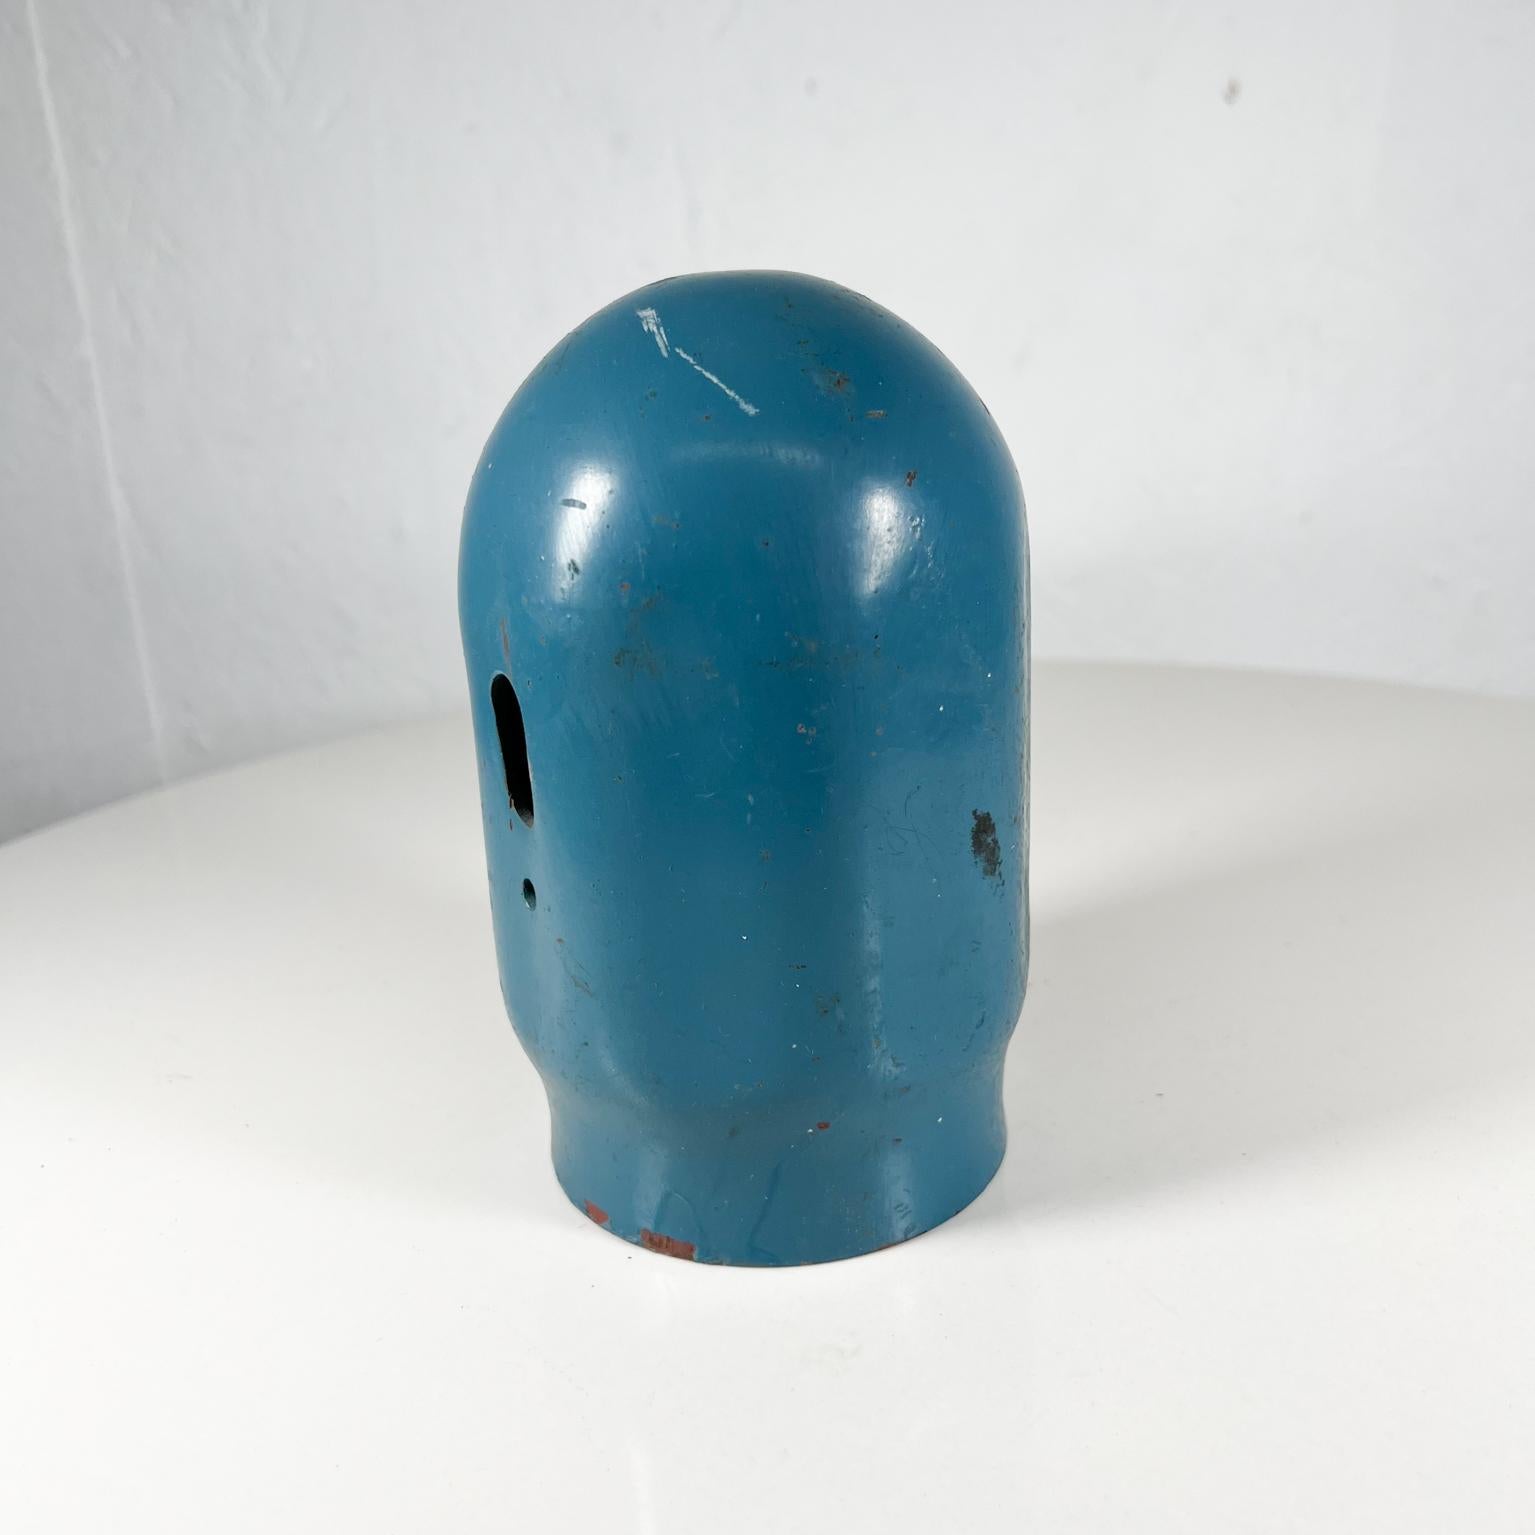 Industrial Old Vintage Blue Threaded Gas Cylinder Cap